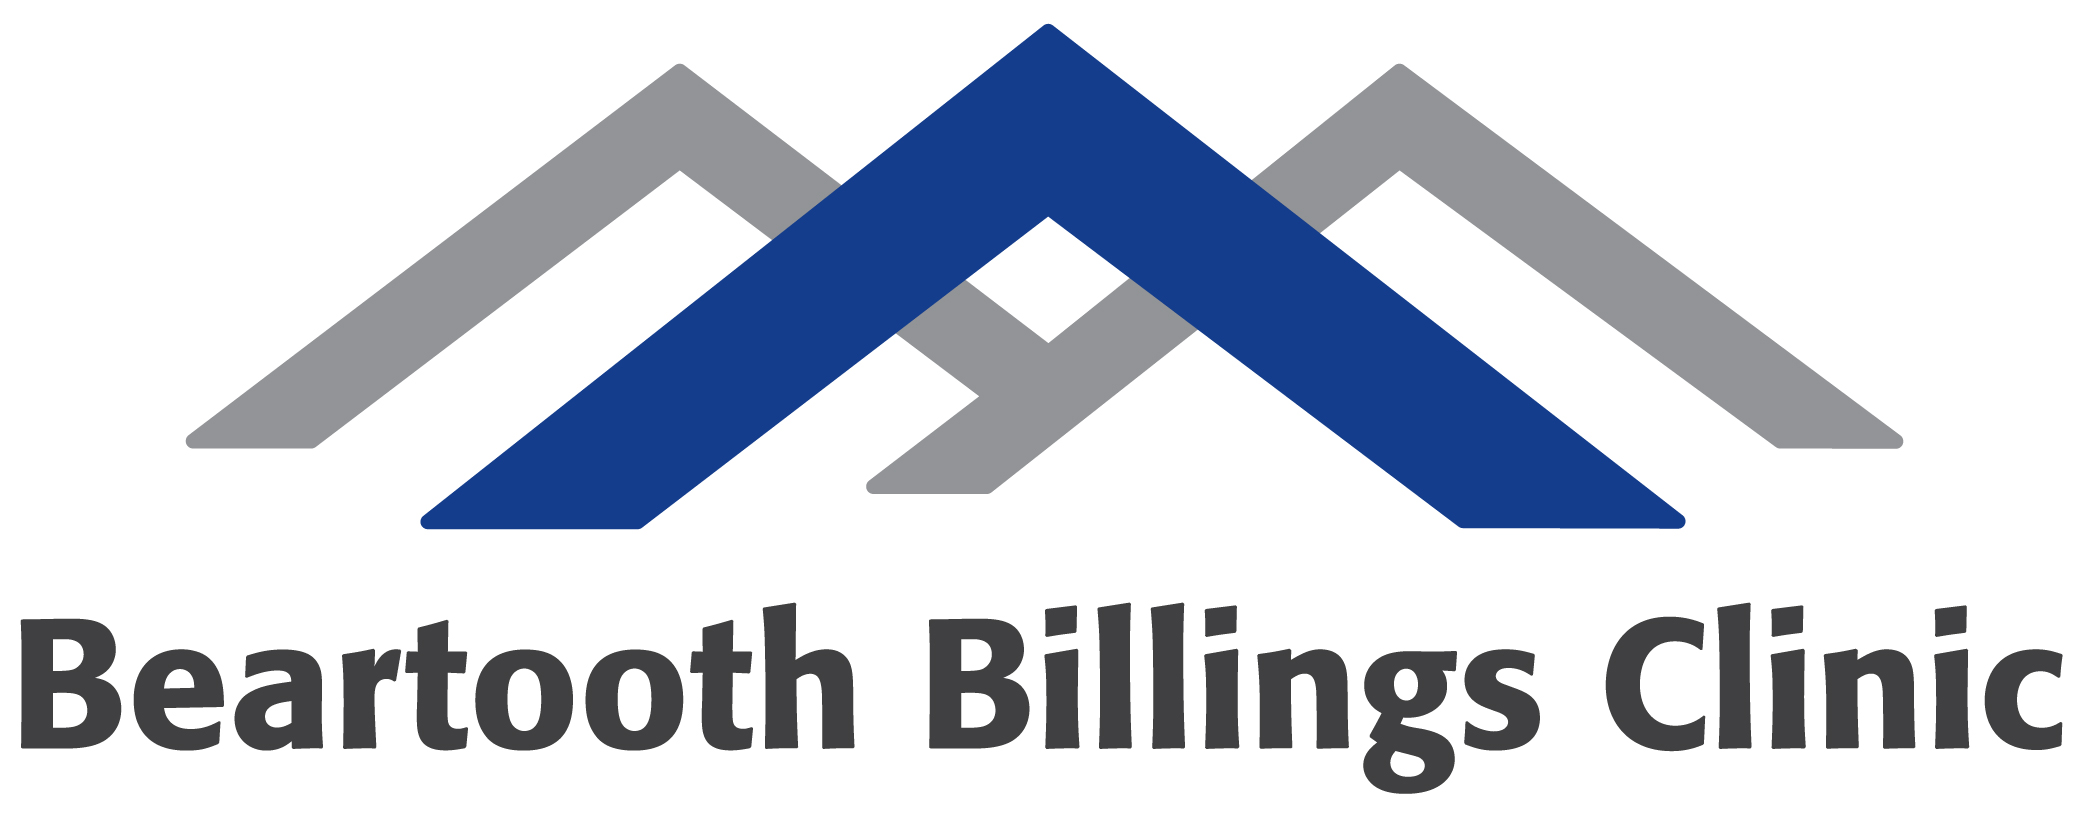 Logo of Beartooth Billings Clinic